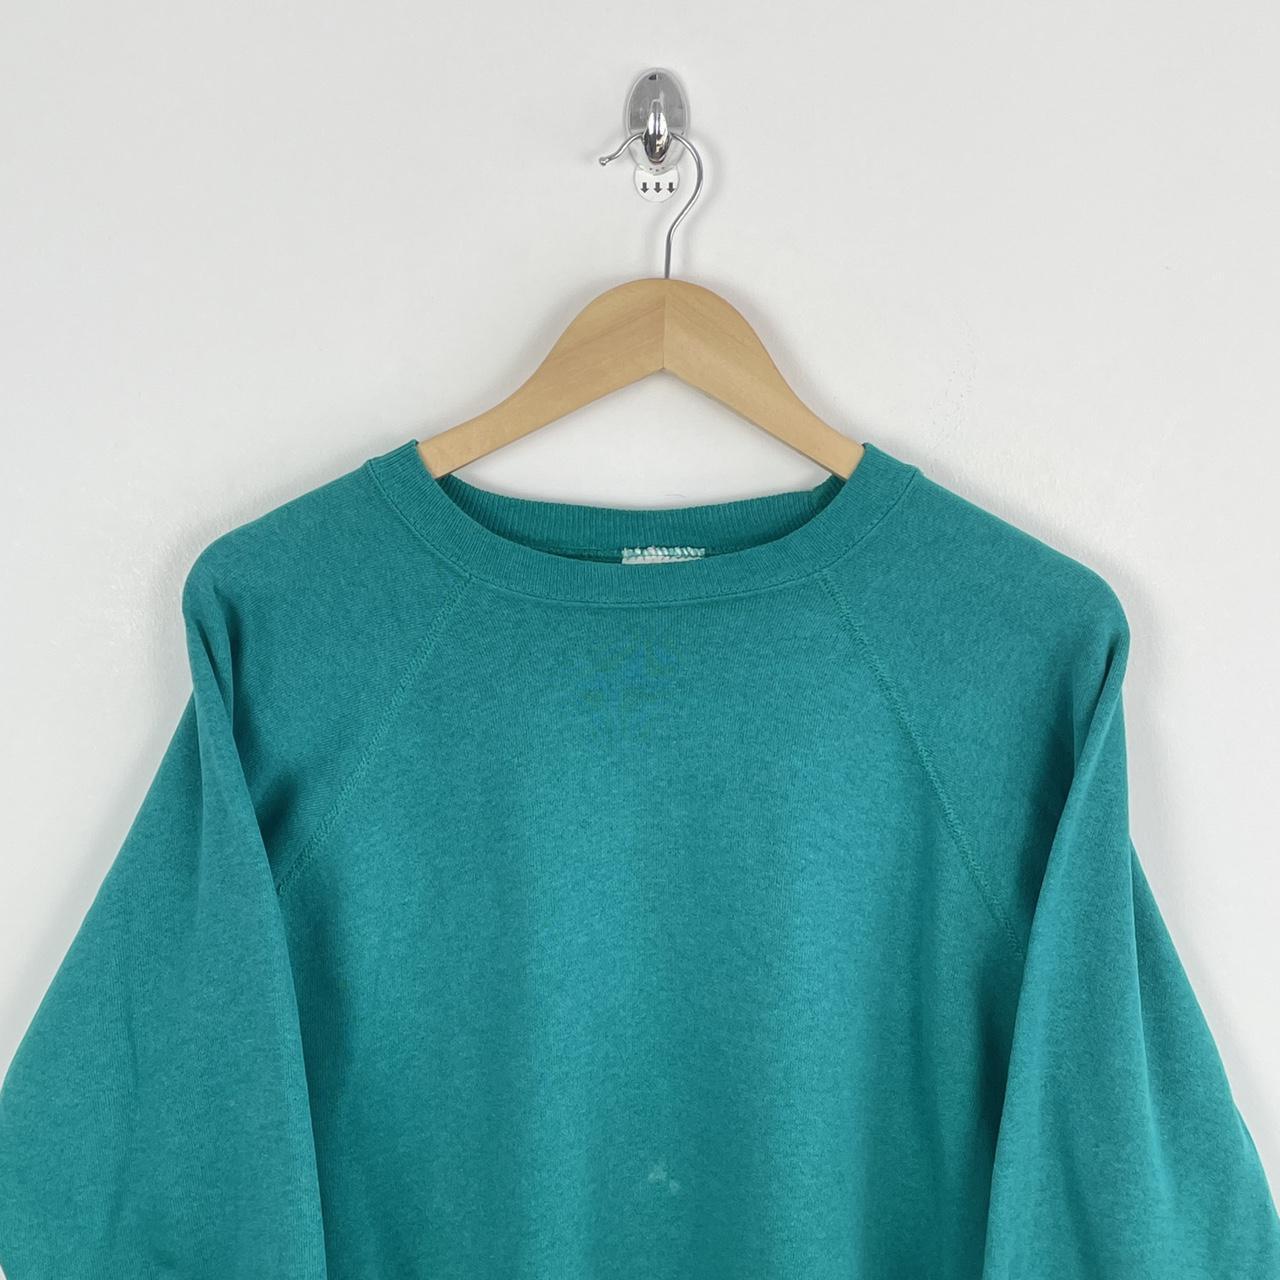 Hanes Her Way Vintage 90s Blank Sweatshirt Green... - Depop